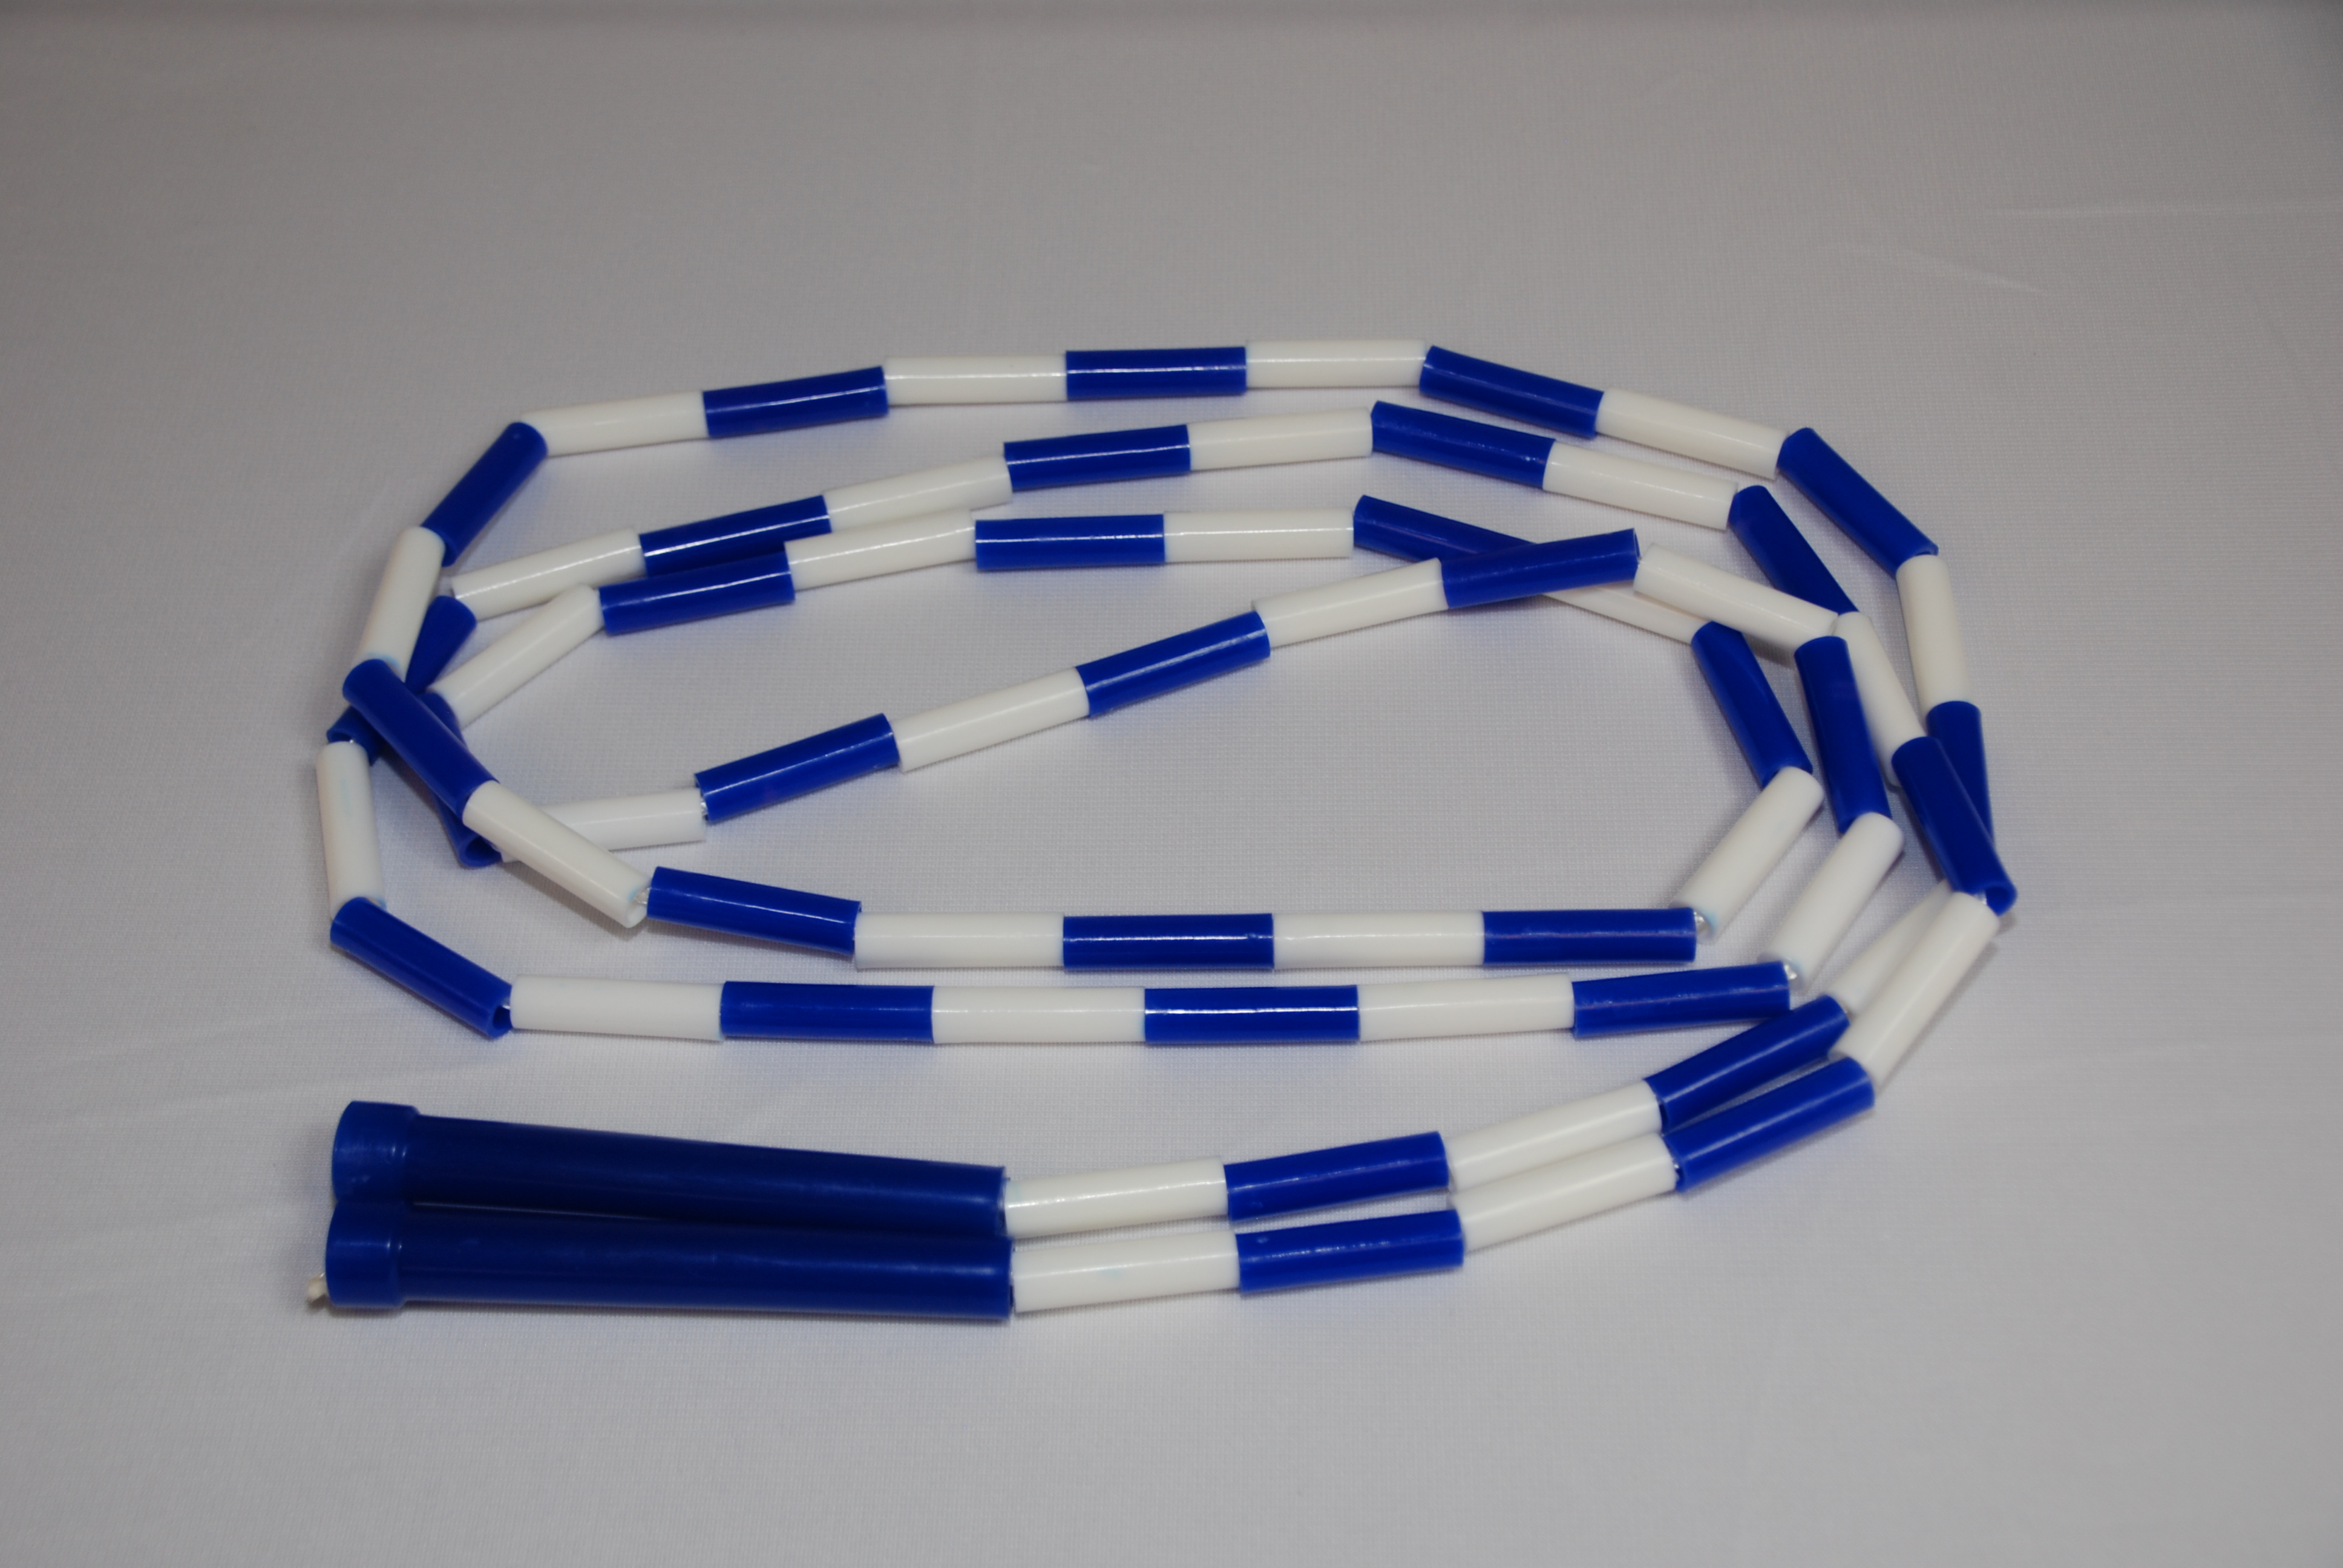 Picture of Everrich EVA-0038 Plastic Segmented Jump Ropes 9 Feet - Set of 6